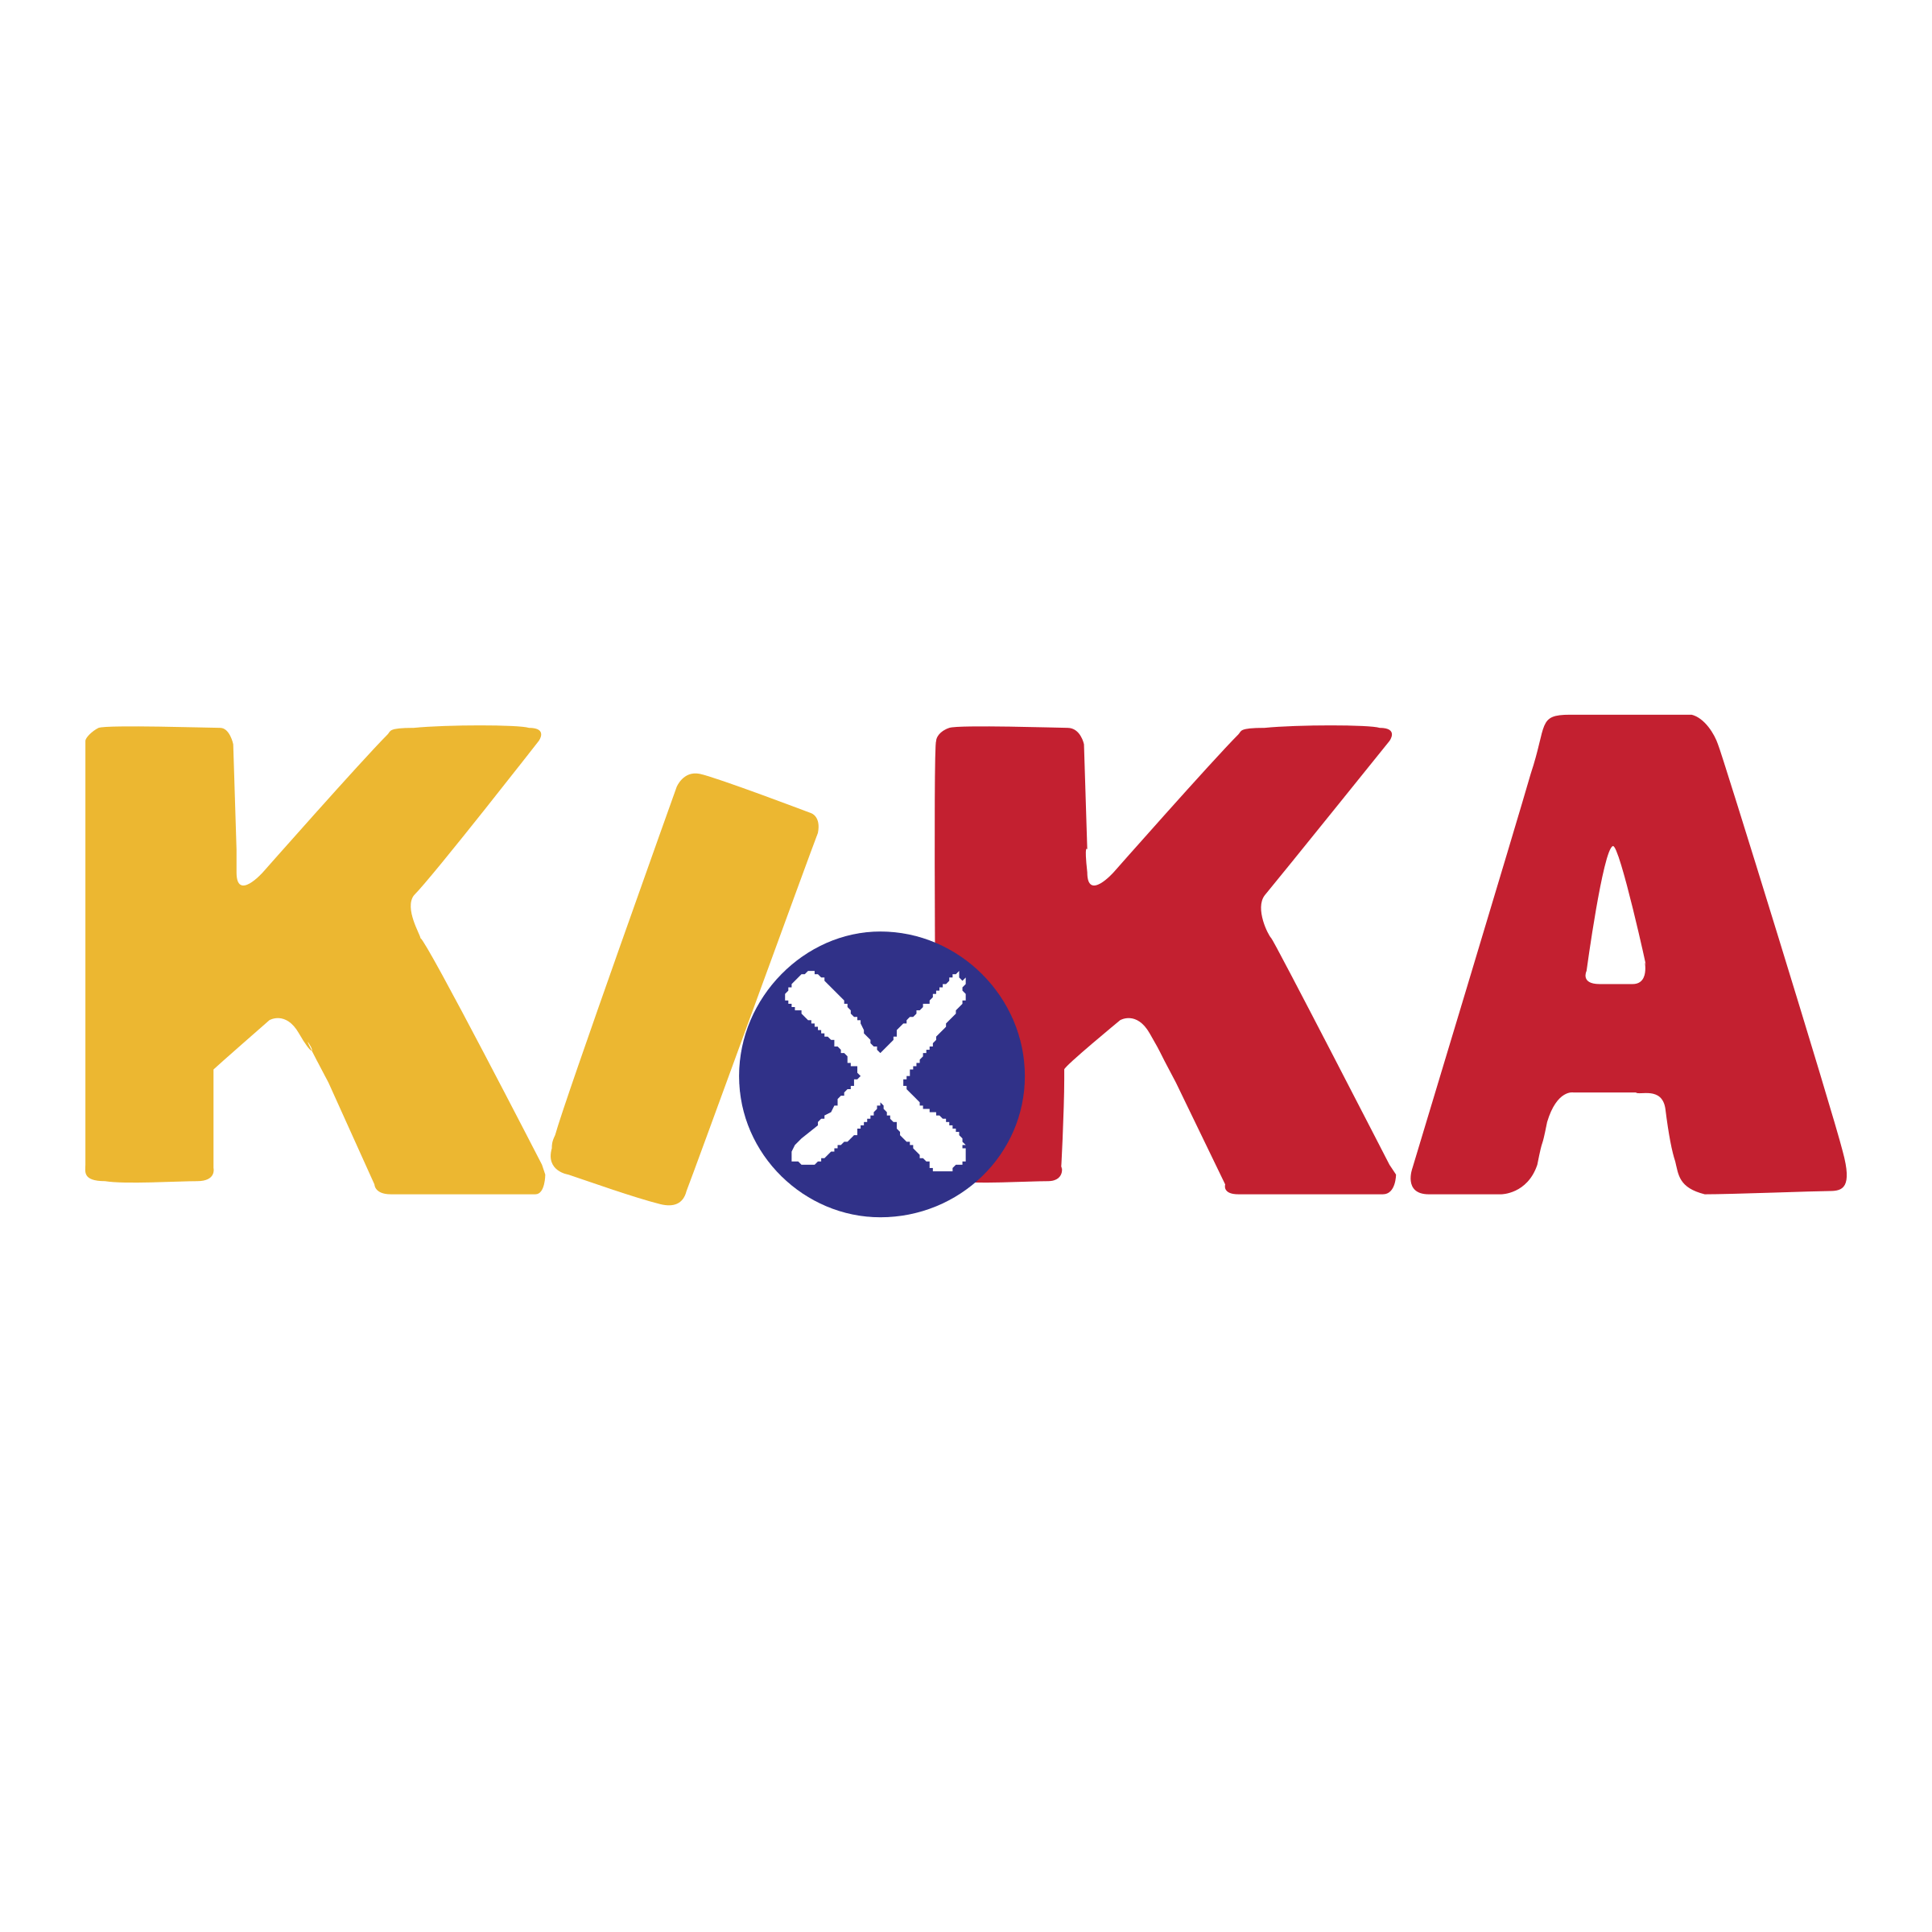 Kika Logo - Kika Logo PNG Transparent & SVG Vector